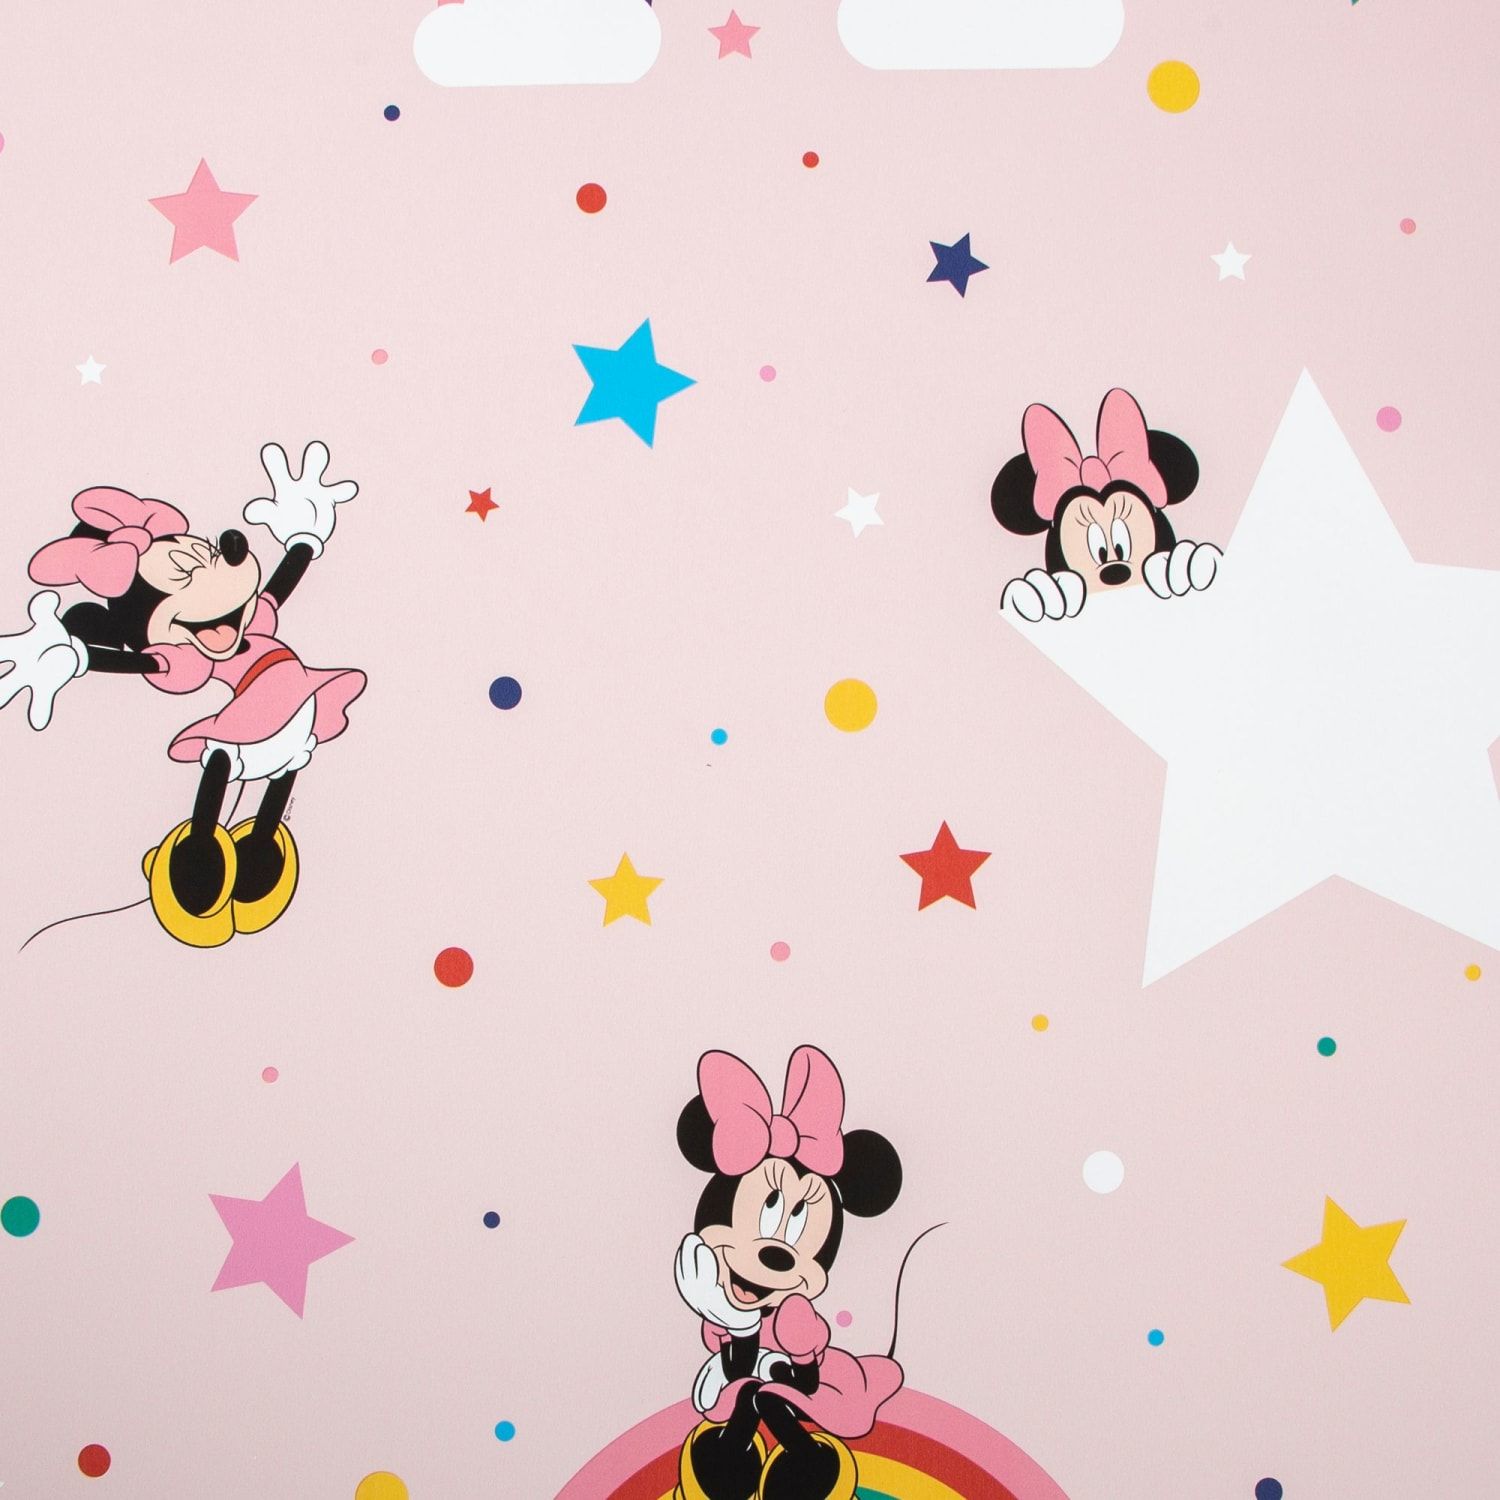  Minnie Mouse Hintergrundbild 1500x1500. Disney Rainbow Minnie Pink Wallpaper 10m. Wickes.co.uk